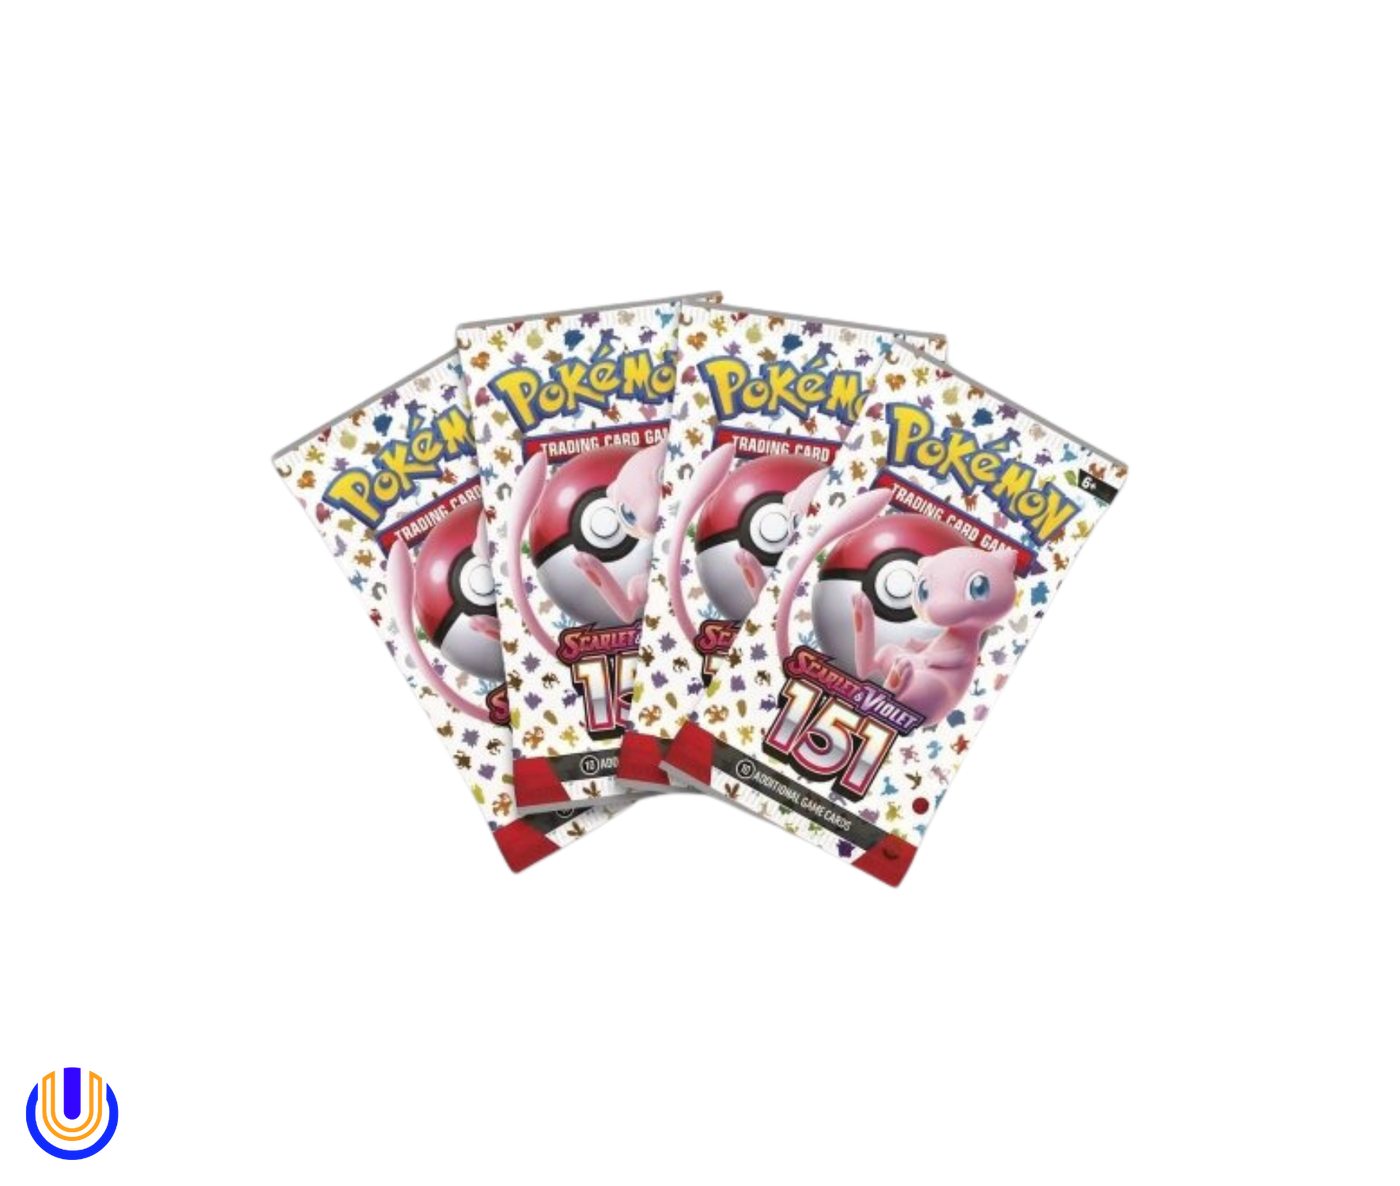 Pokémon TCG: Scarlet & Violet-151 Collection (Alakazam ex)